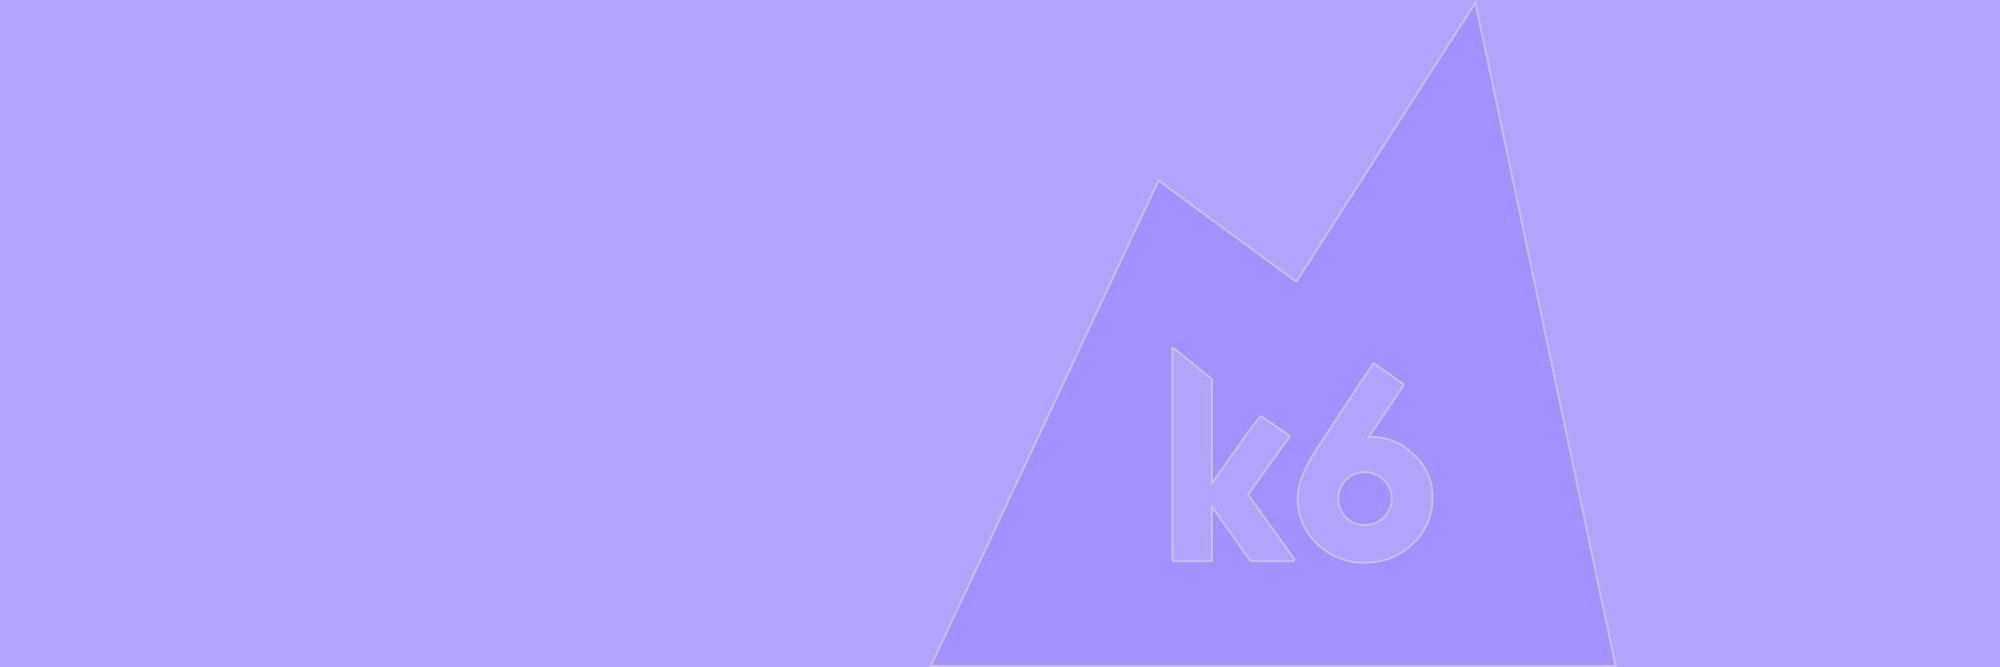 k6 logo on a purple background